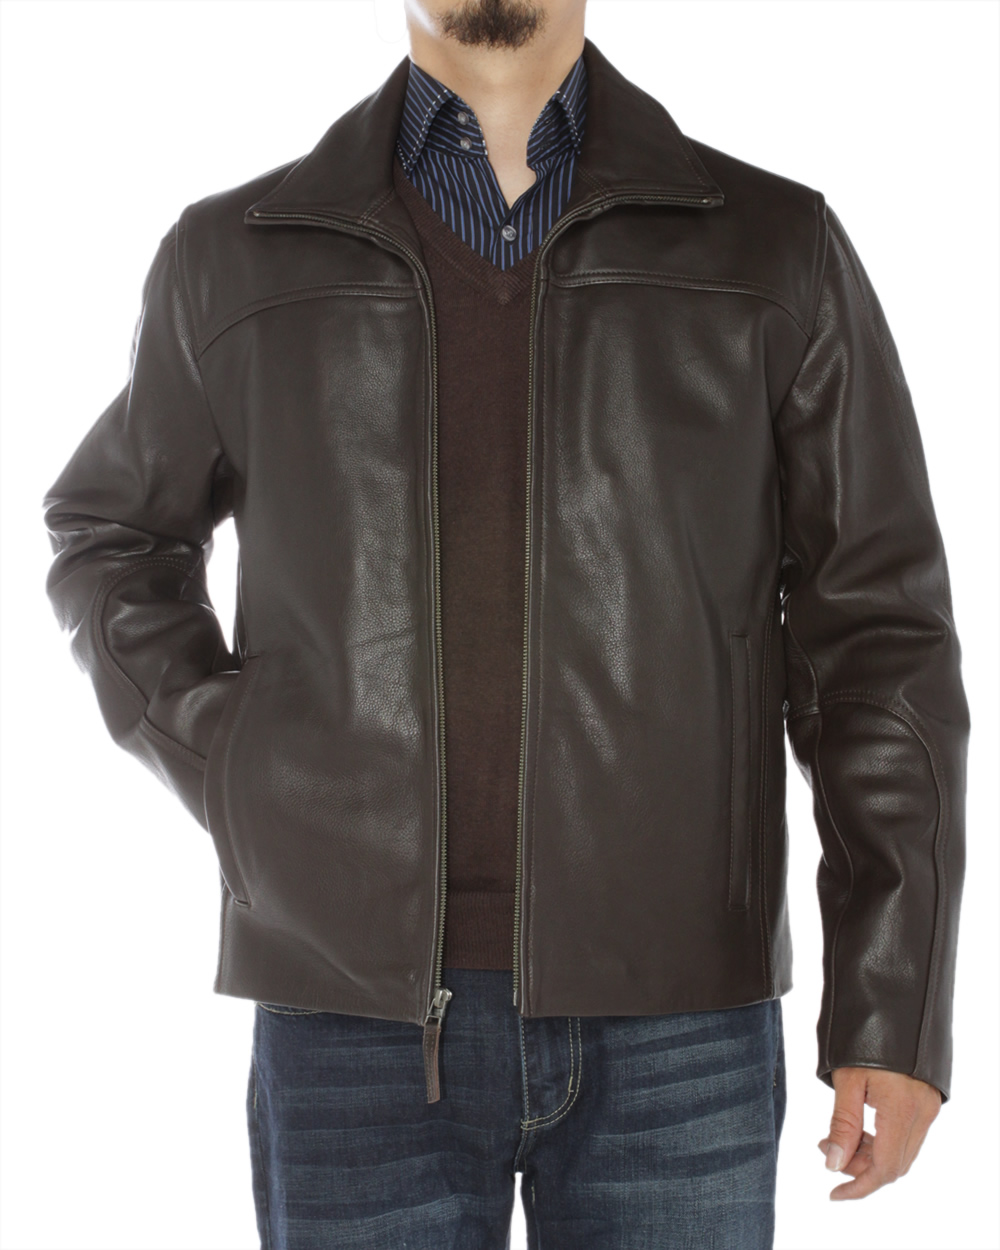 LUCIANO NATAZZI Mens Classic Full Grain Cow Leather Jacket | eBay